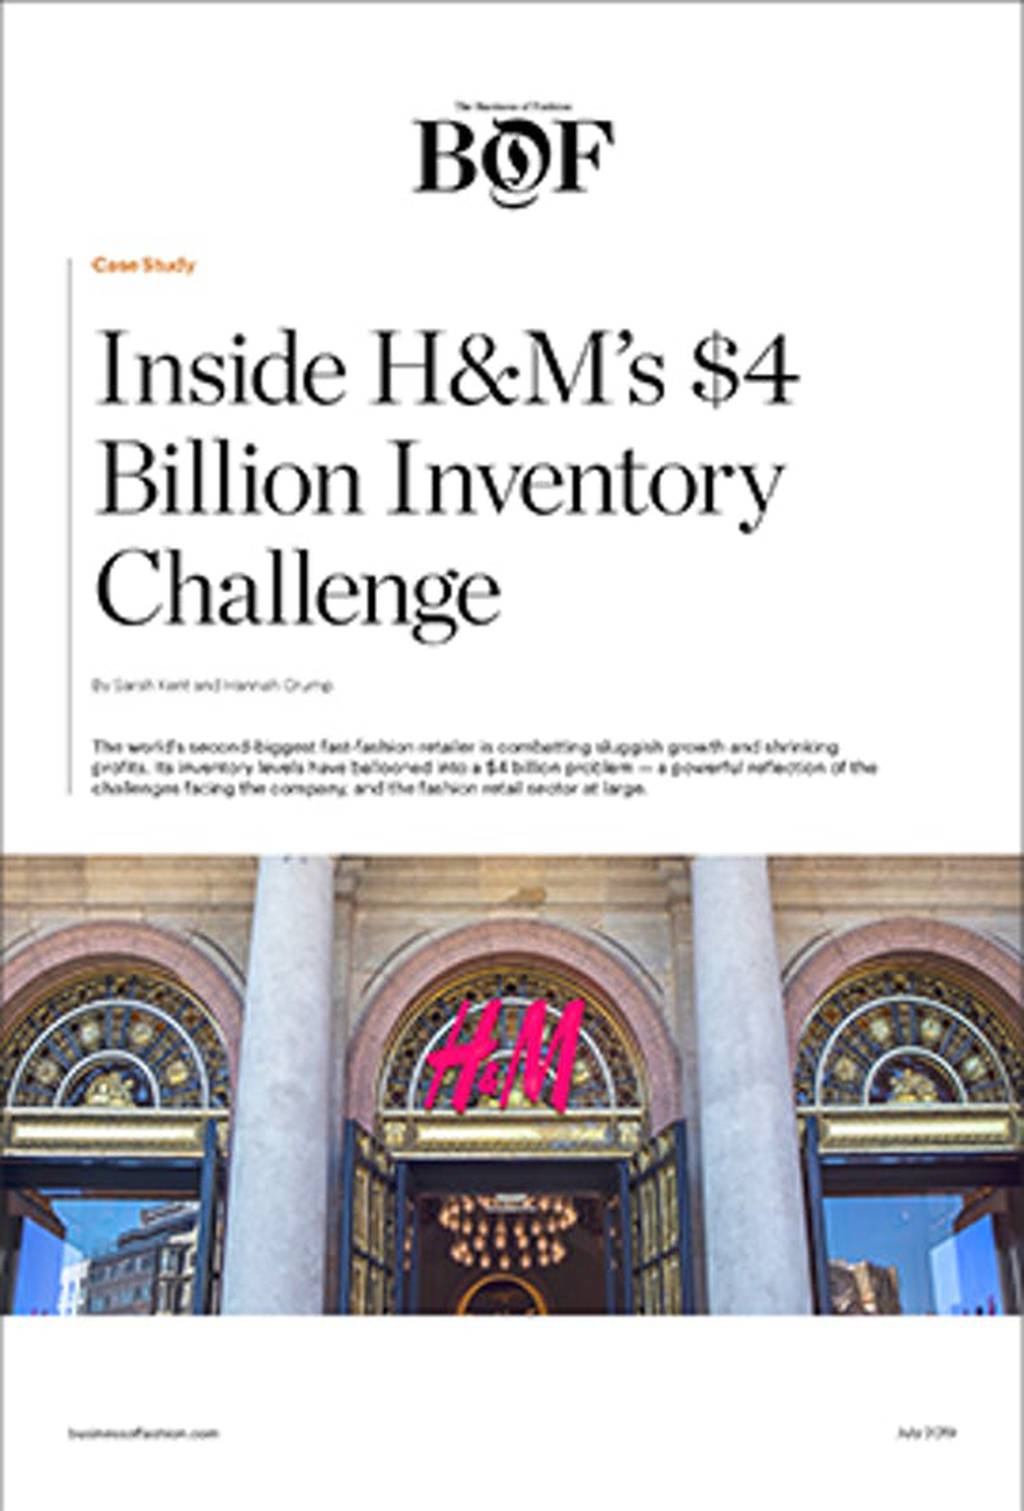 Inside H&M's $4 Billion Inventory Challenge